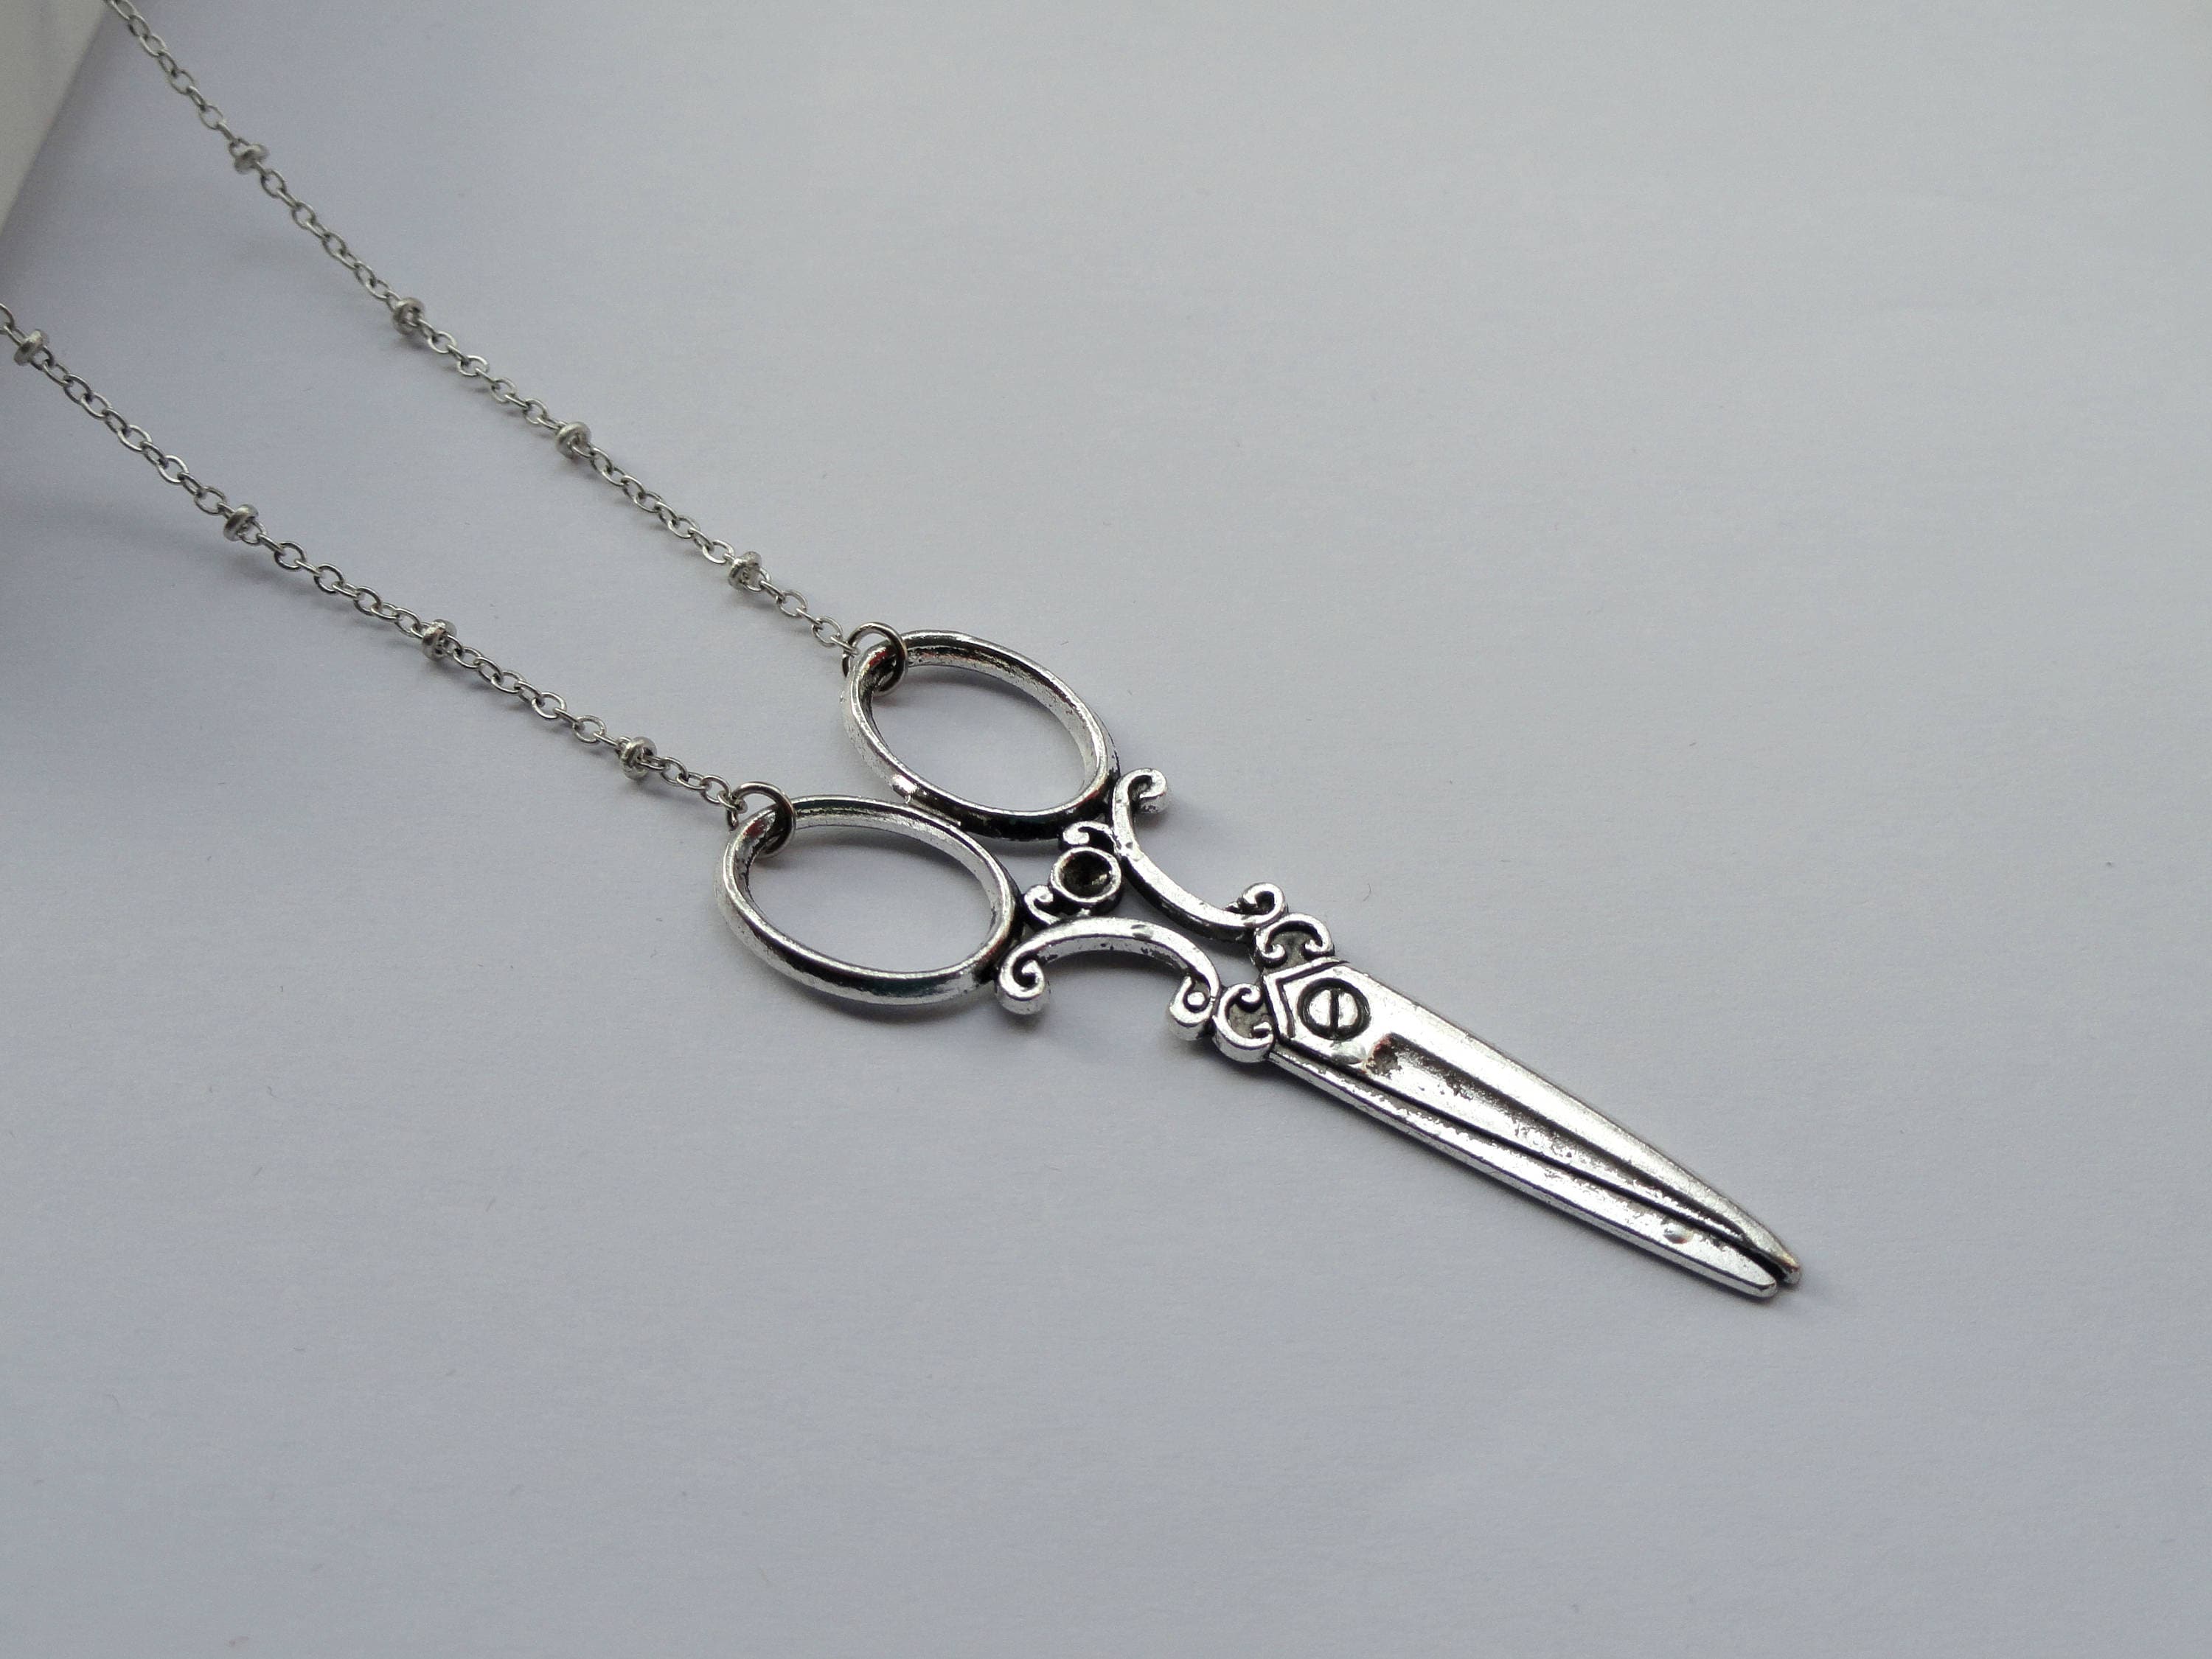 The Scissor Design Charm Necklace